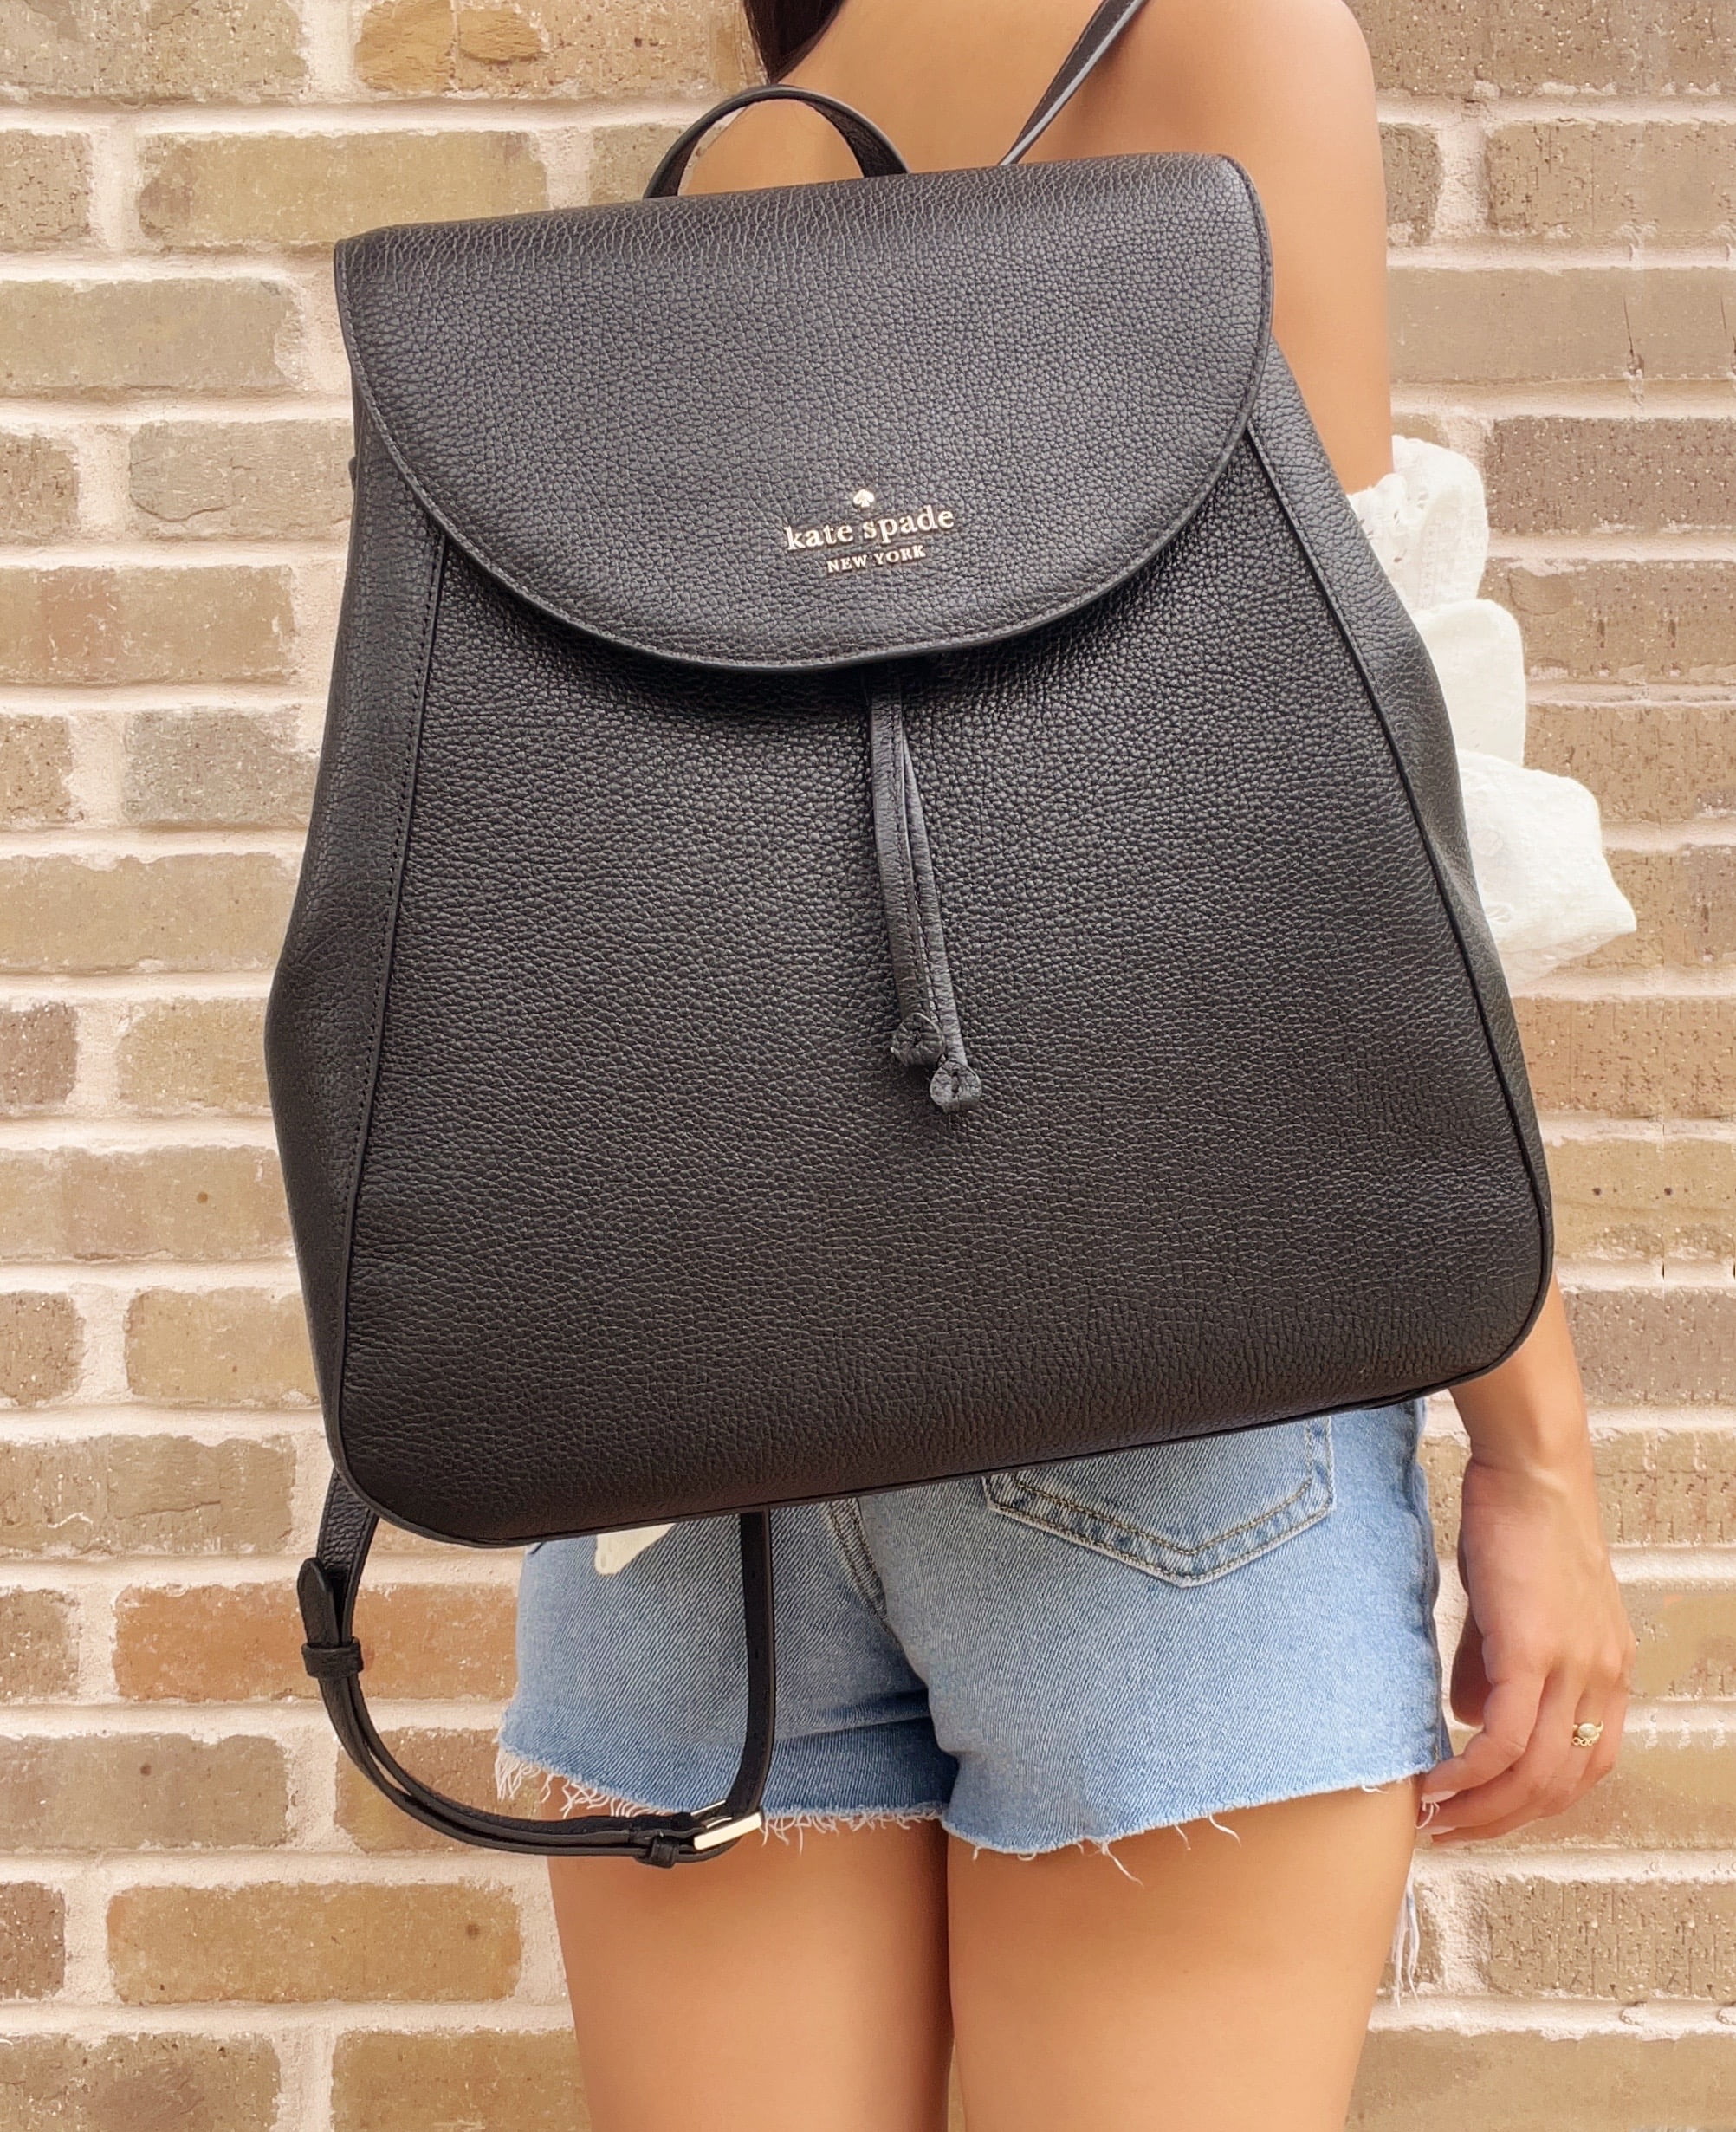 Kate Spade New York Leila Large Flap Leather Drawstring Backpack Black -  